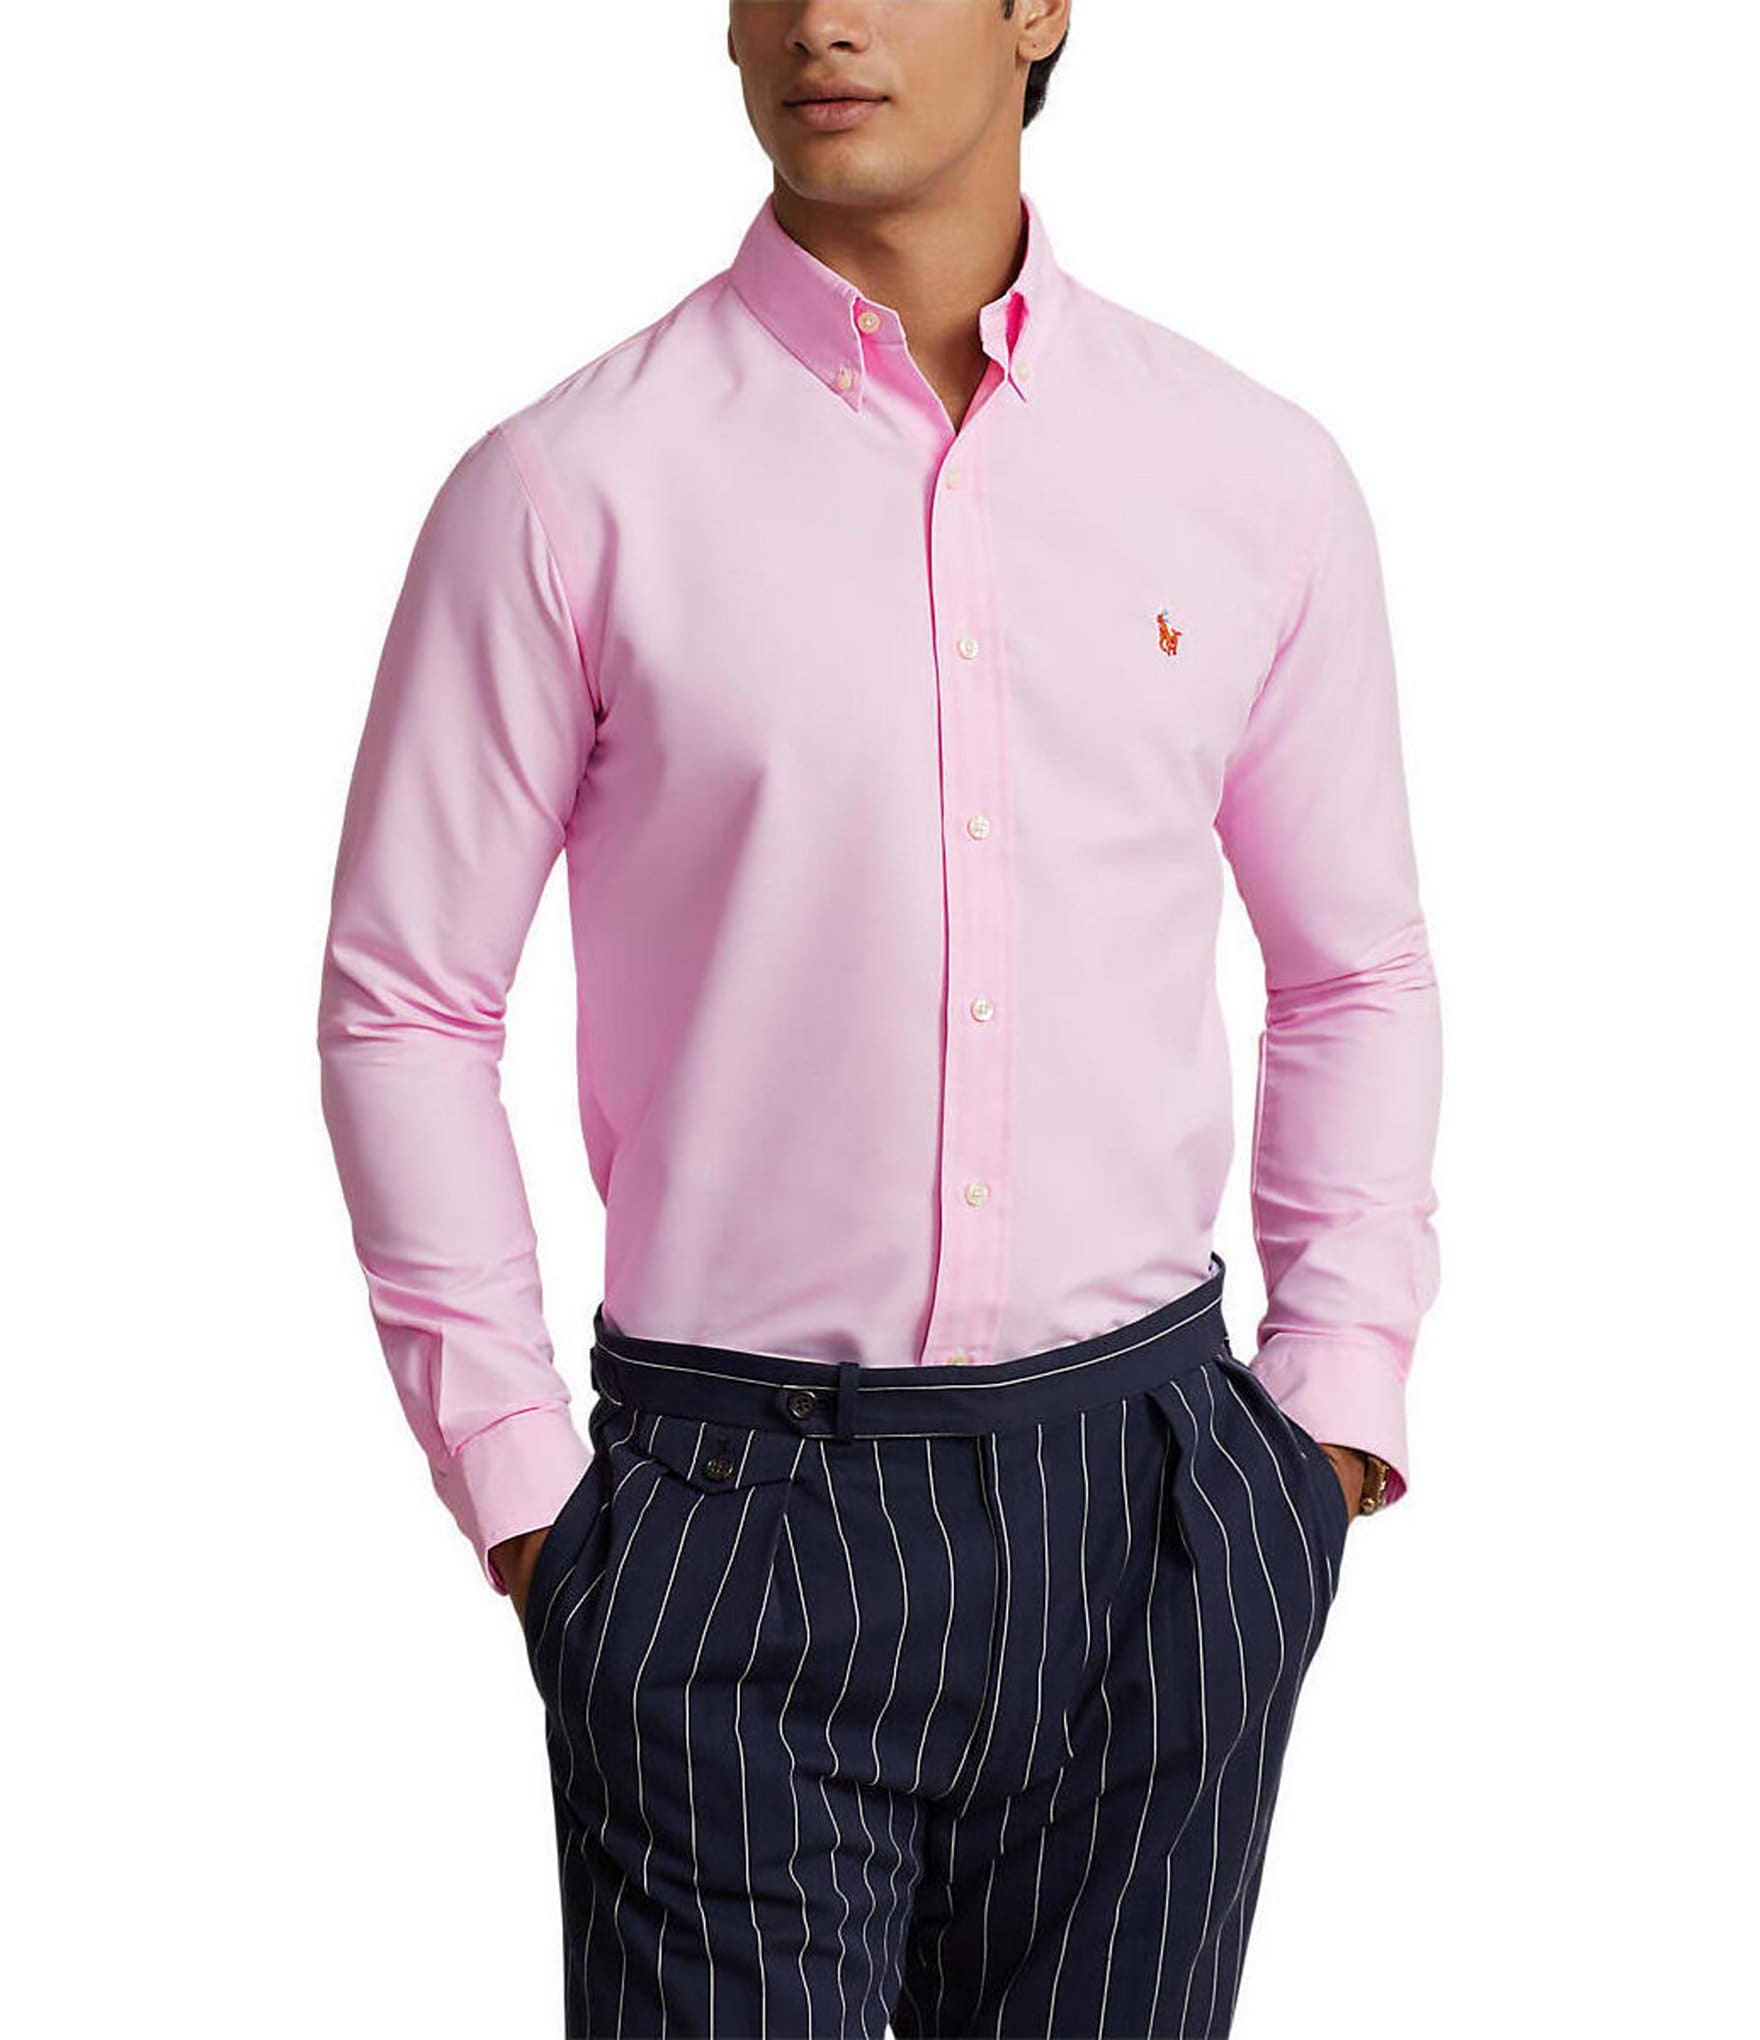 Polo Ralph Lauren Men's Classic Fit Performance Oxford Shirt, 2XL